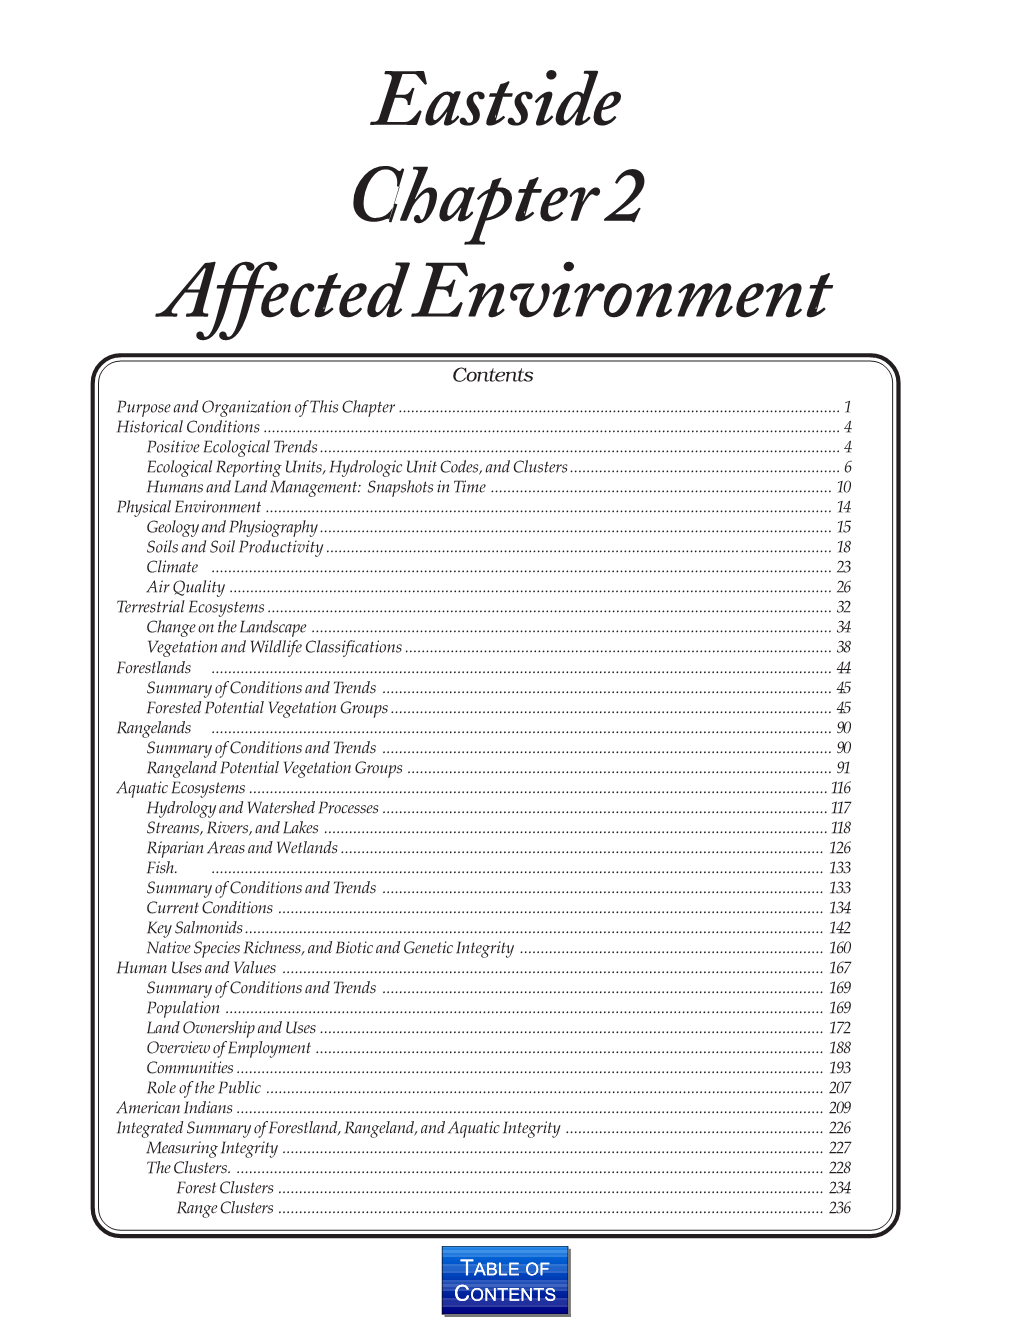 Eastside Chapter 2 Affected Environment